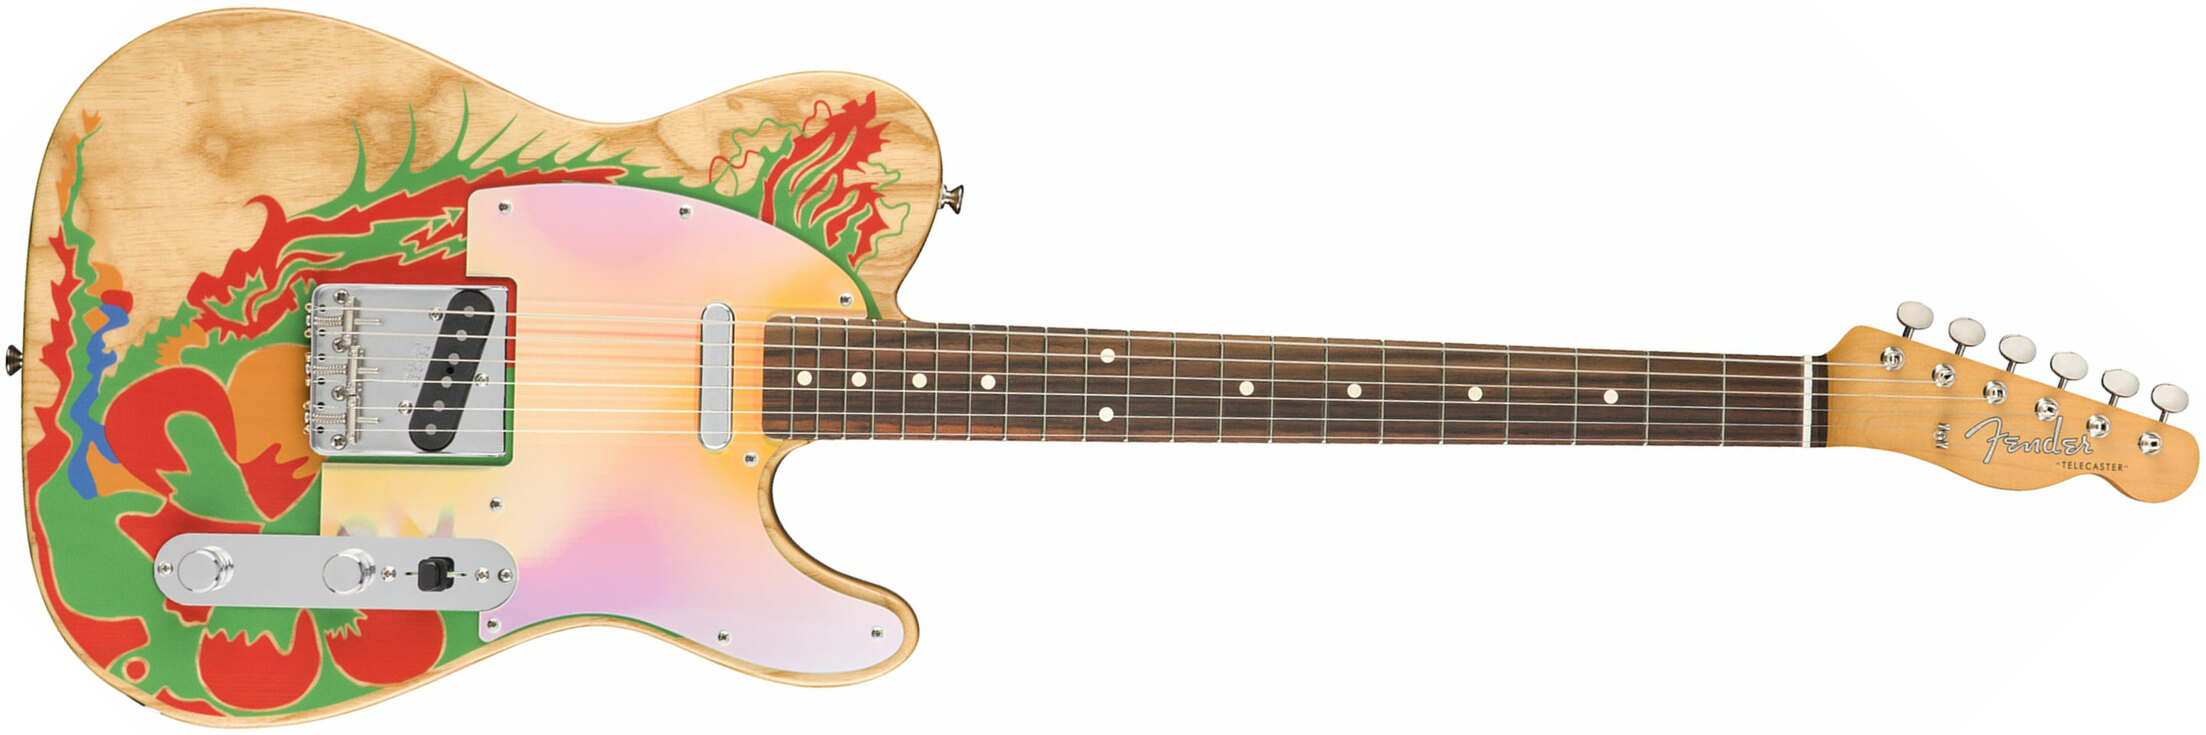 Fender Jimmy Page Tele Dragon Ltd Mex Signature Rw - Natural - Tel shape electric guitar - Main picture